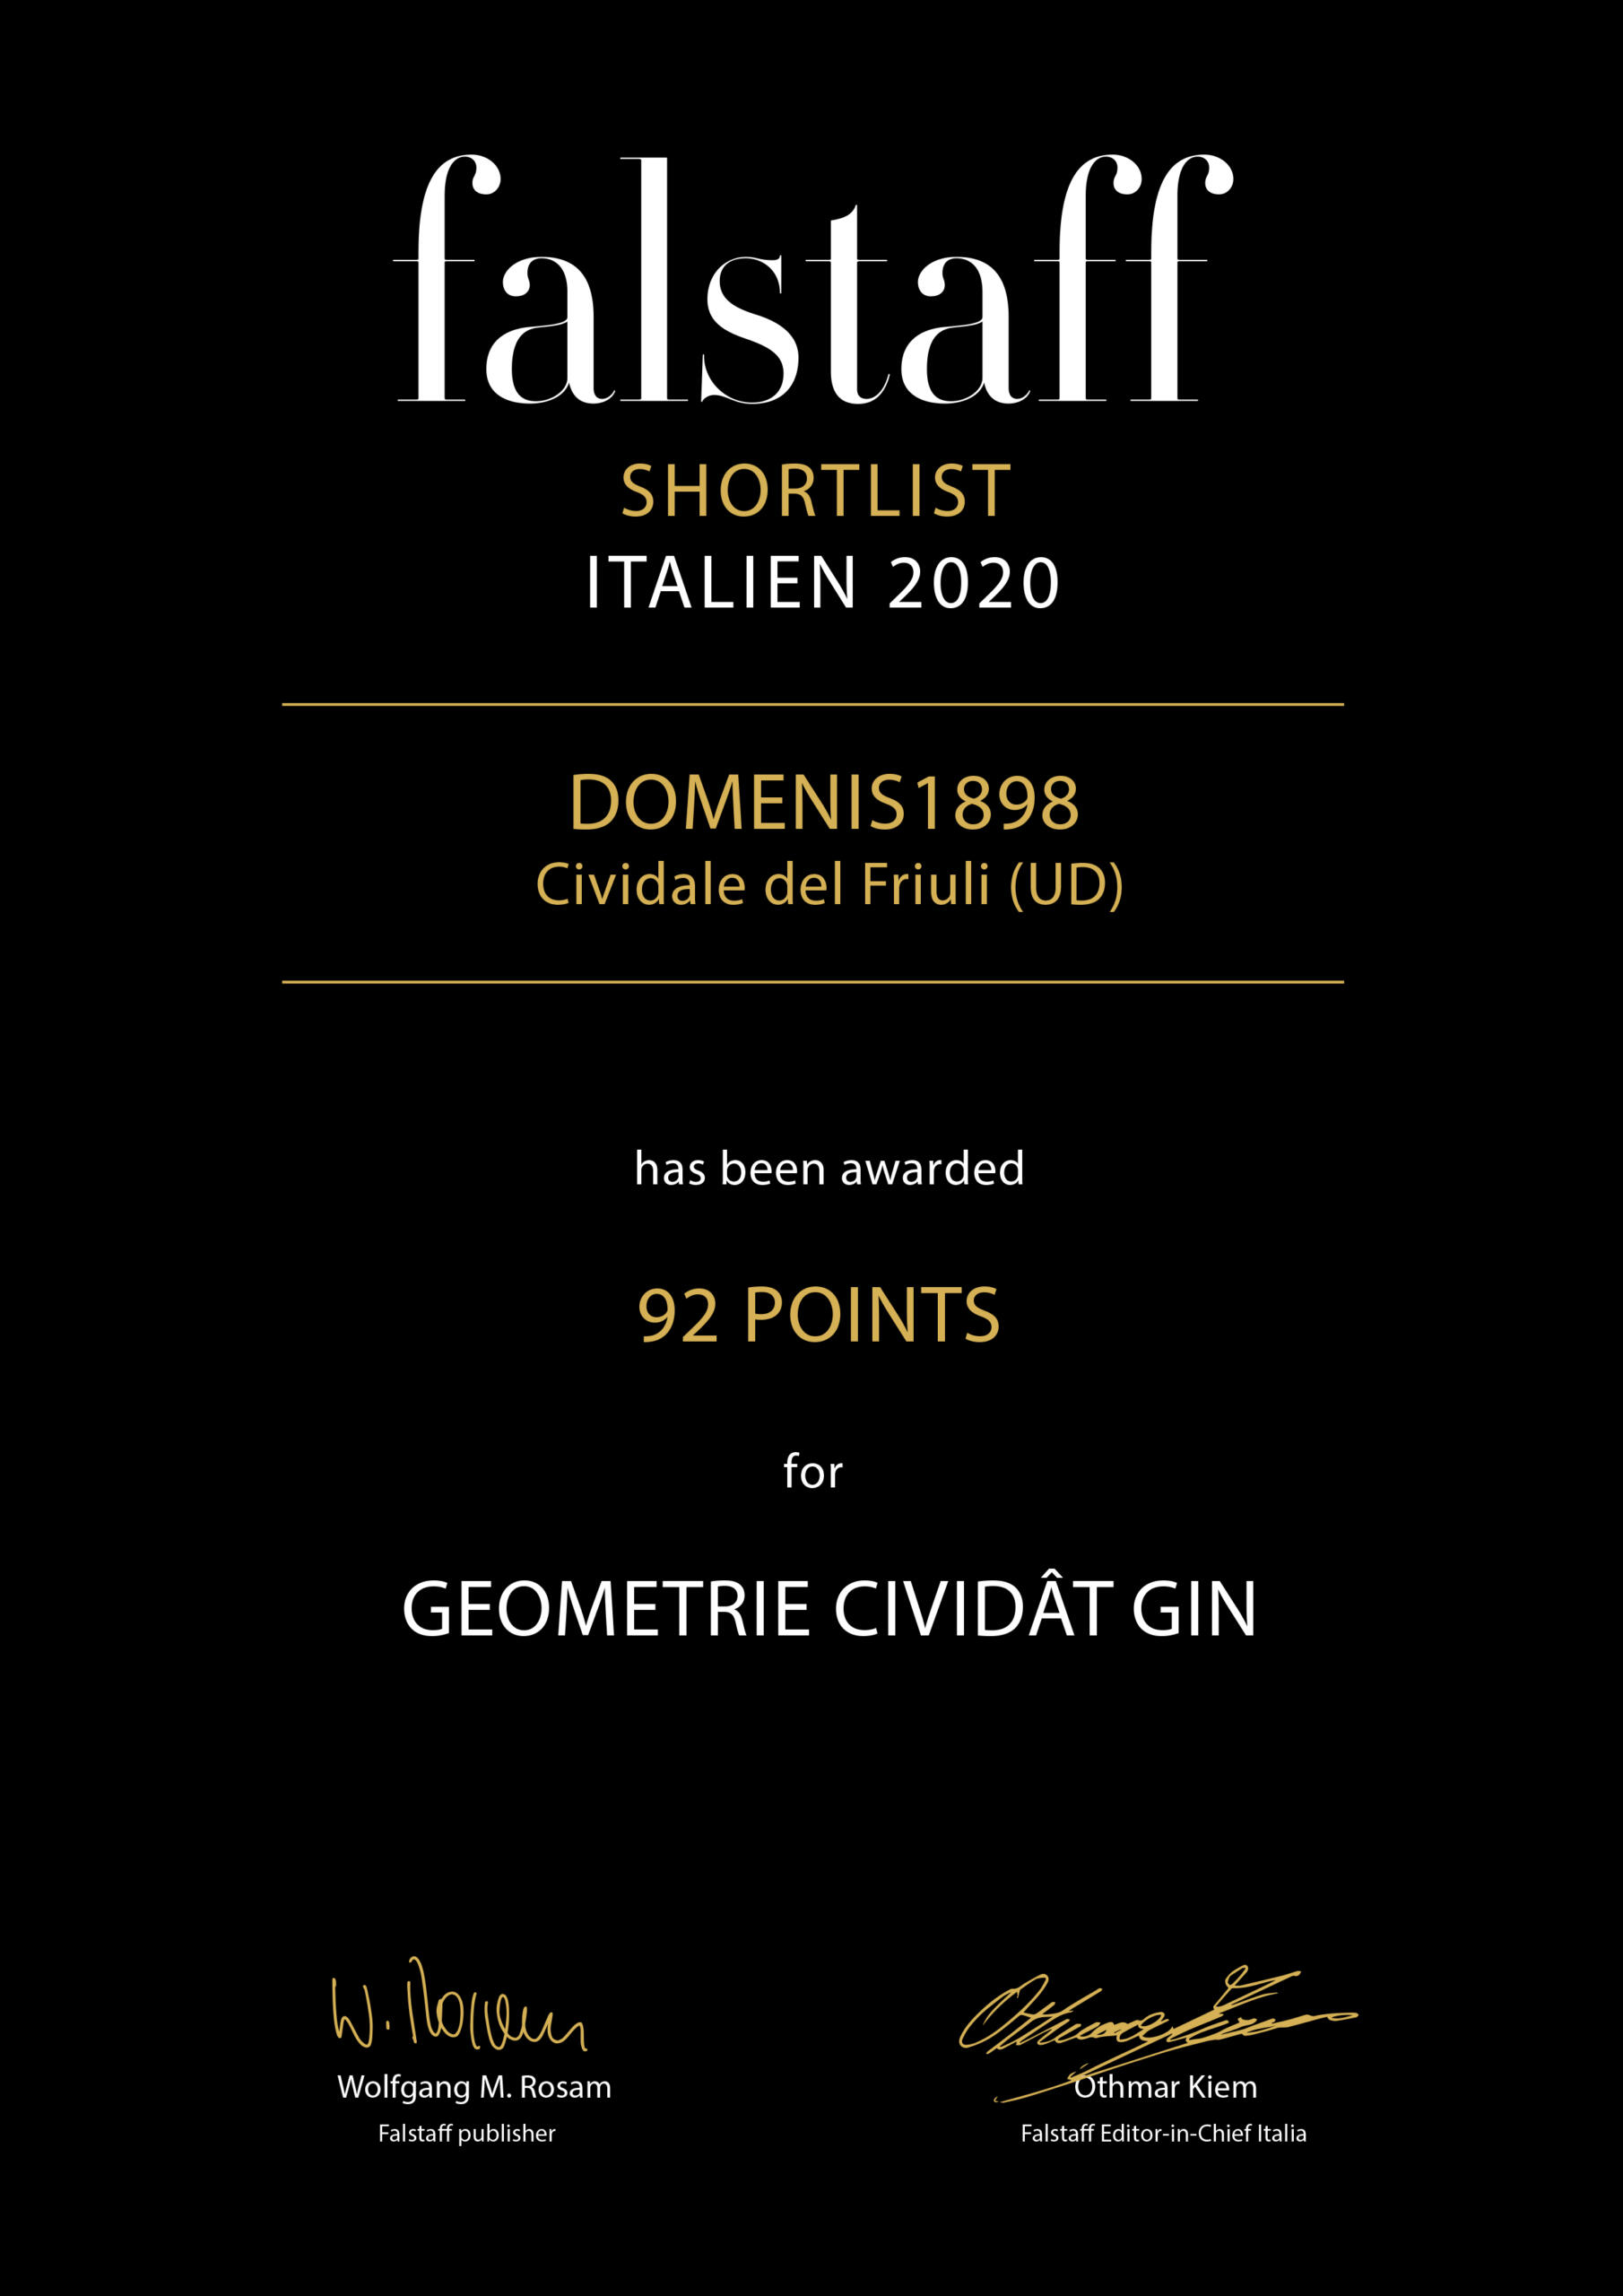 Falstaff Shortlist Italien 2020 – Geometrie Cividât